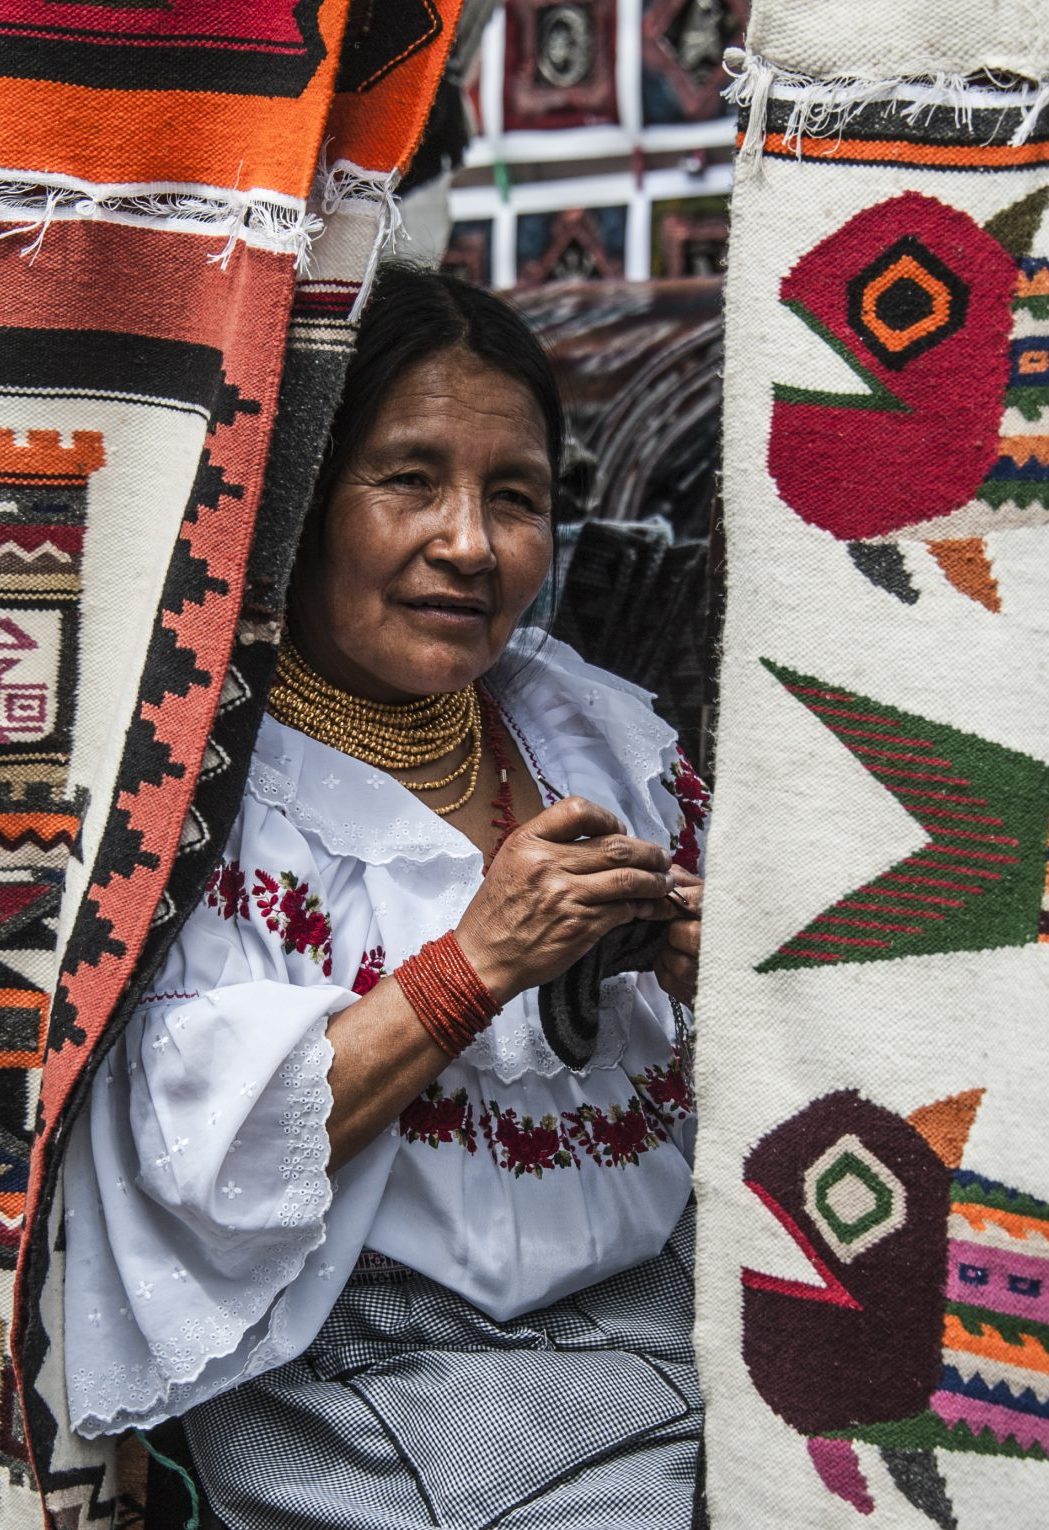 Ecuadorian Indian ethnic women in national clothes at a market